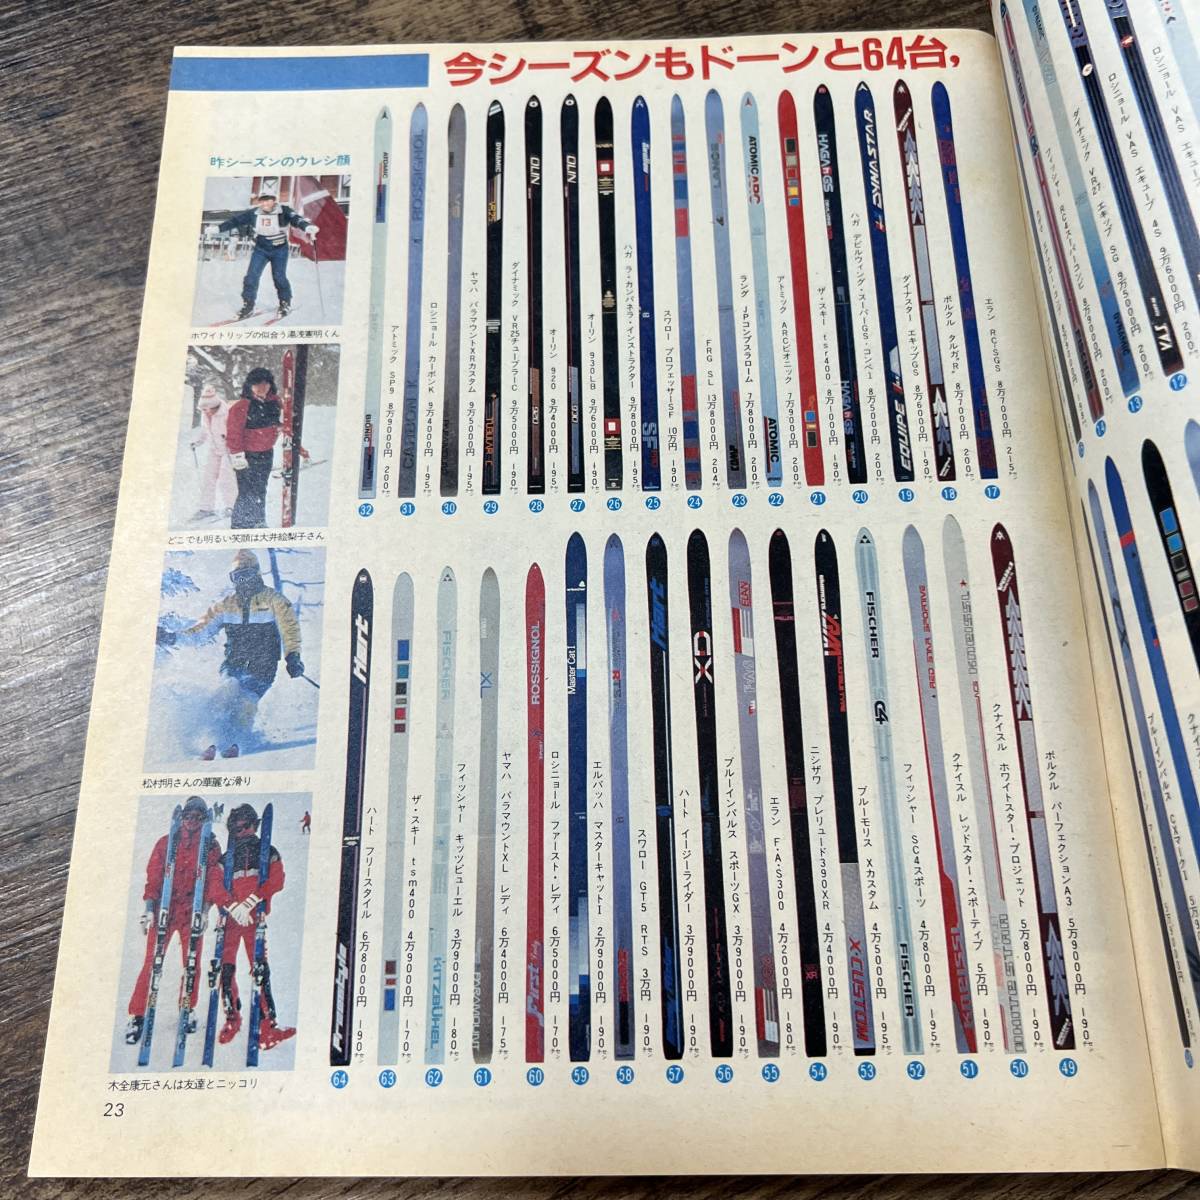 K-1706#Skier No.0 1985 year 8 month 1 day ( ski ya-)# newest tool information & catalog / ski information magazine # mountain ... company 